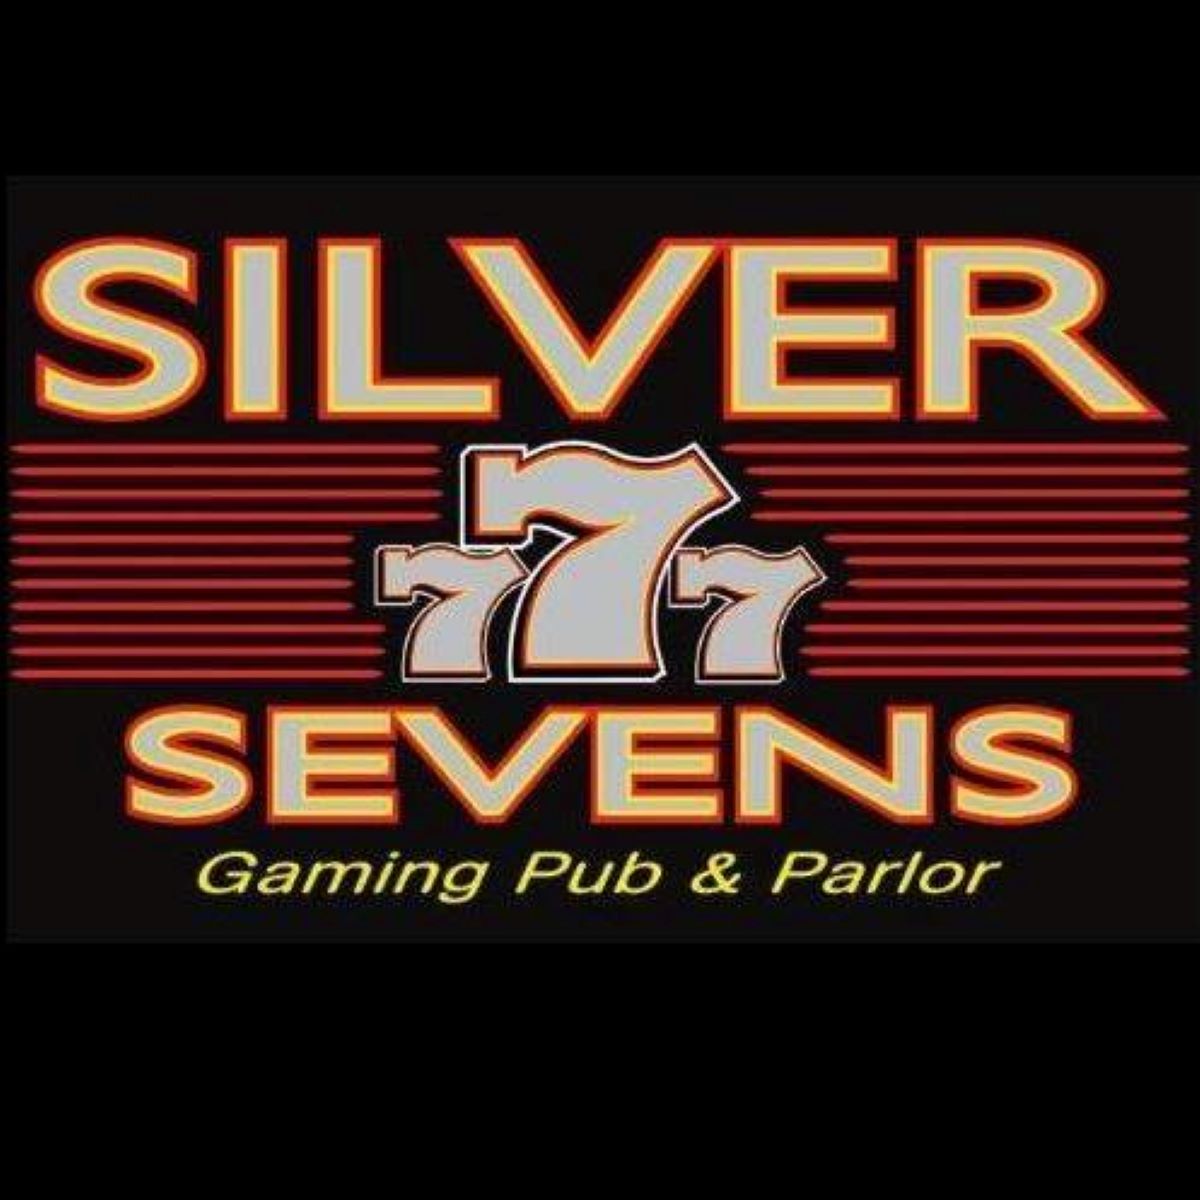 Silver Sevens Gaming Pub & Parlor